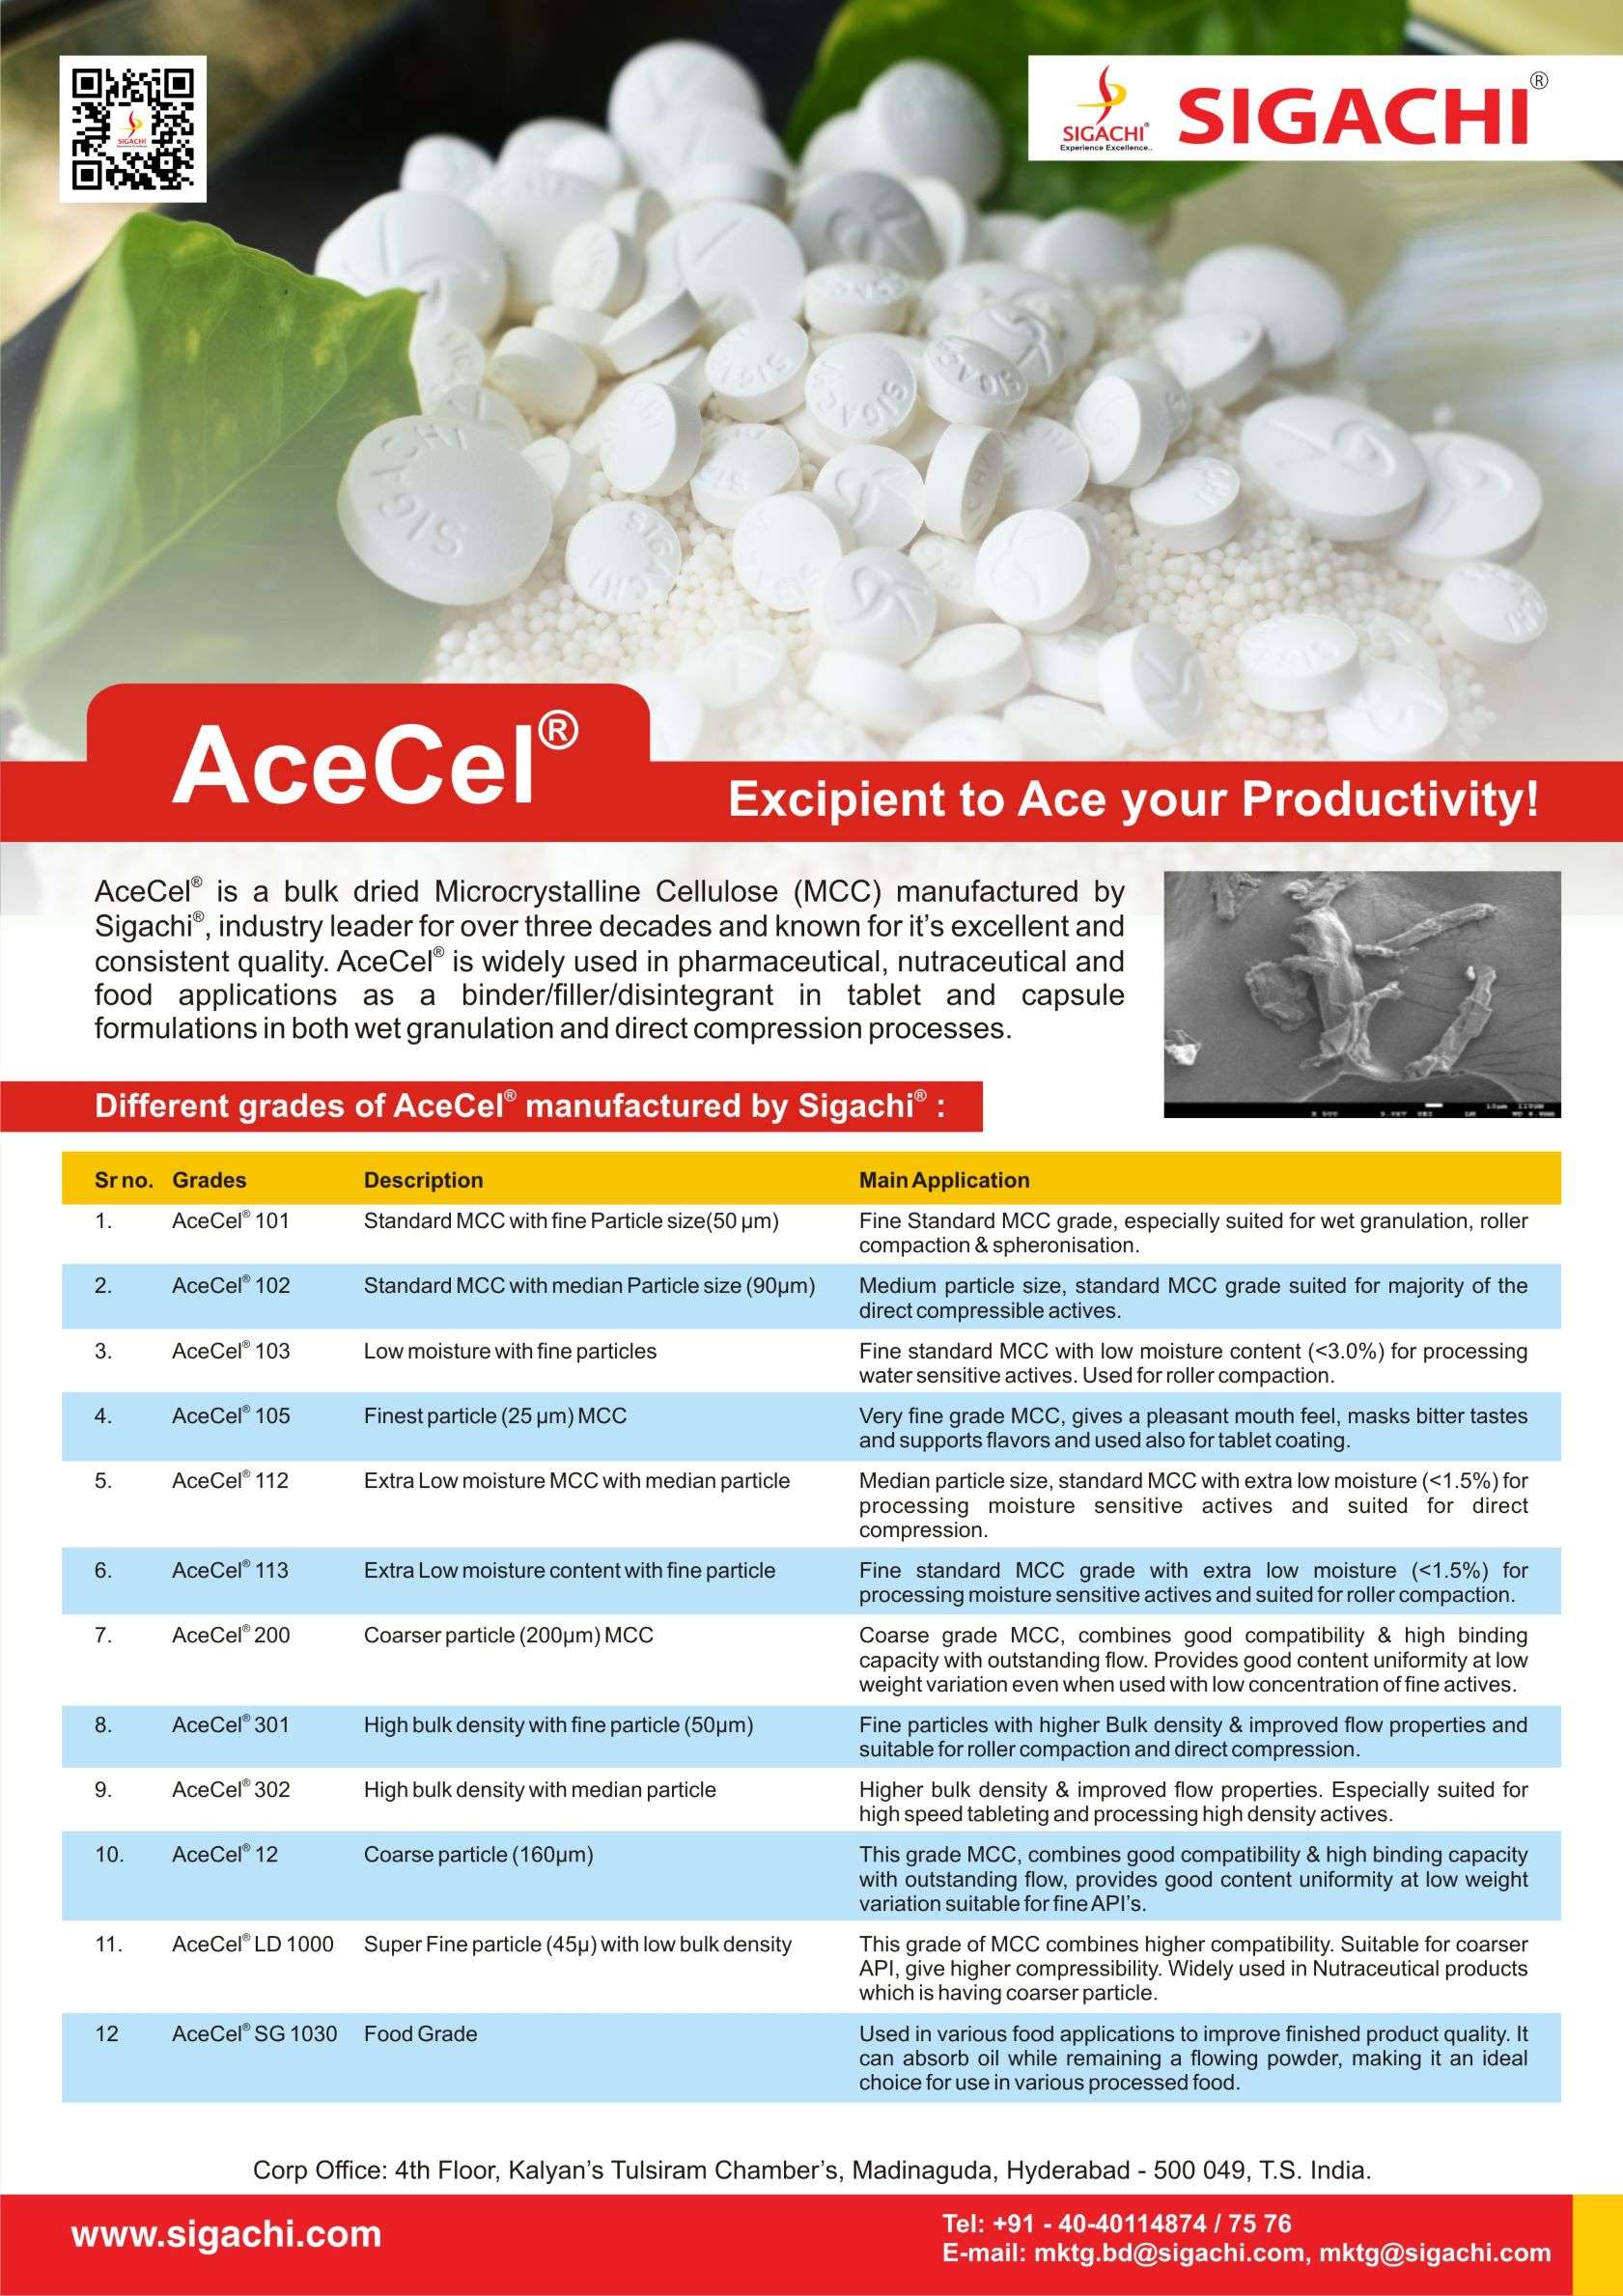 AceCe1® 112